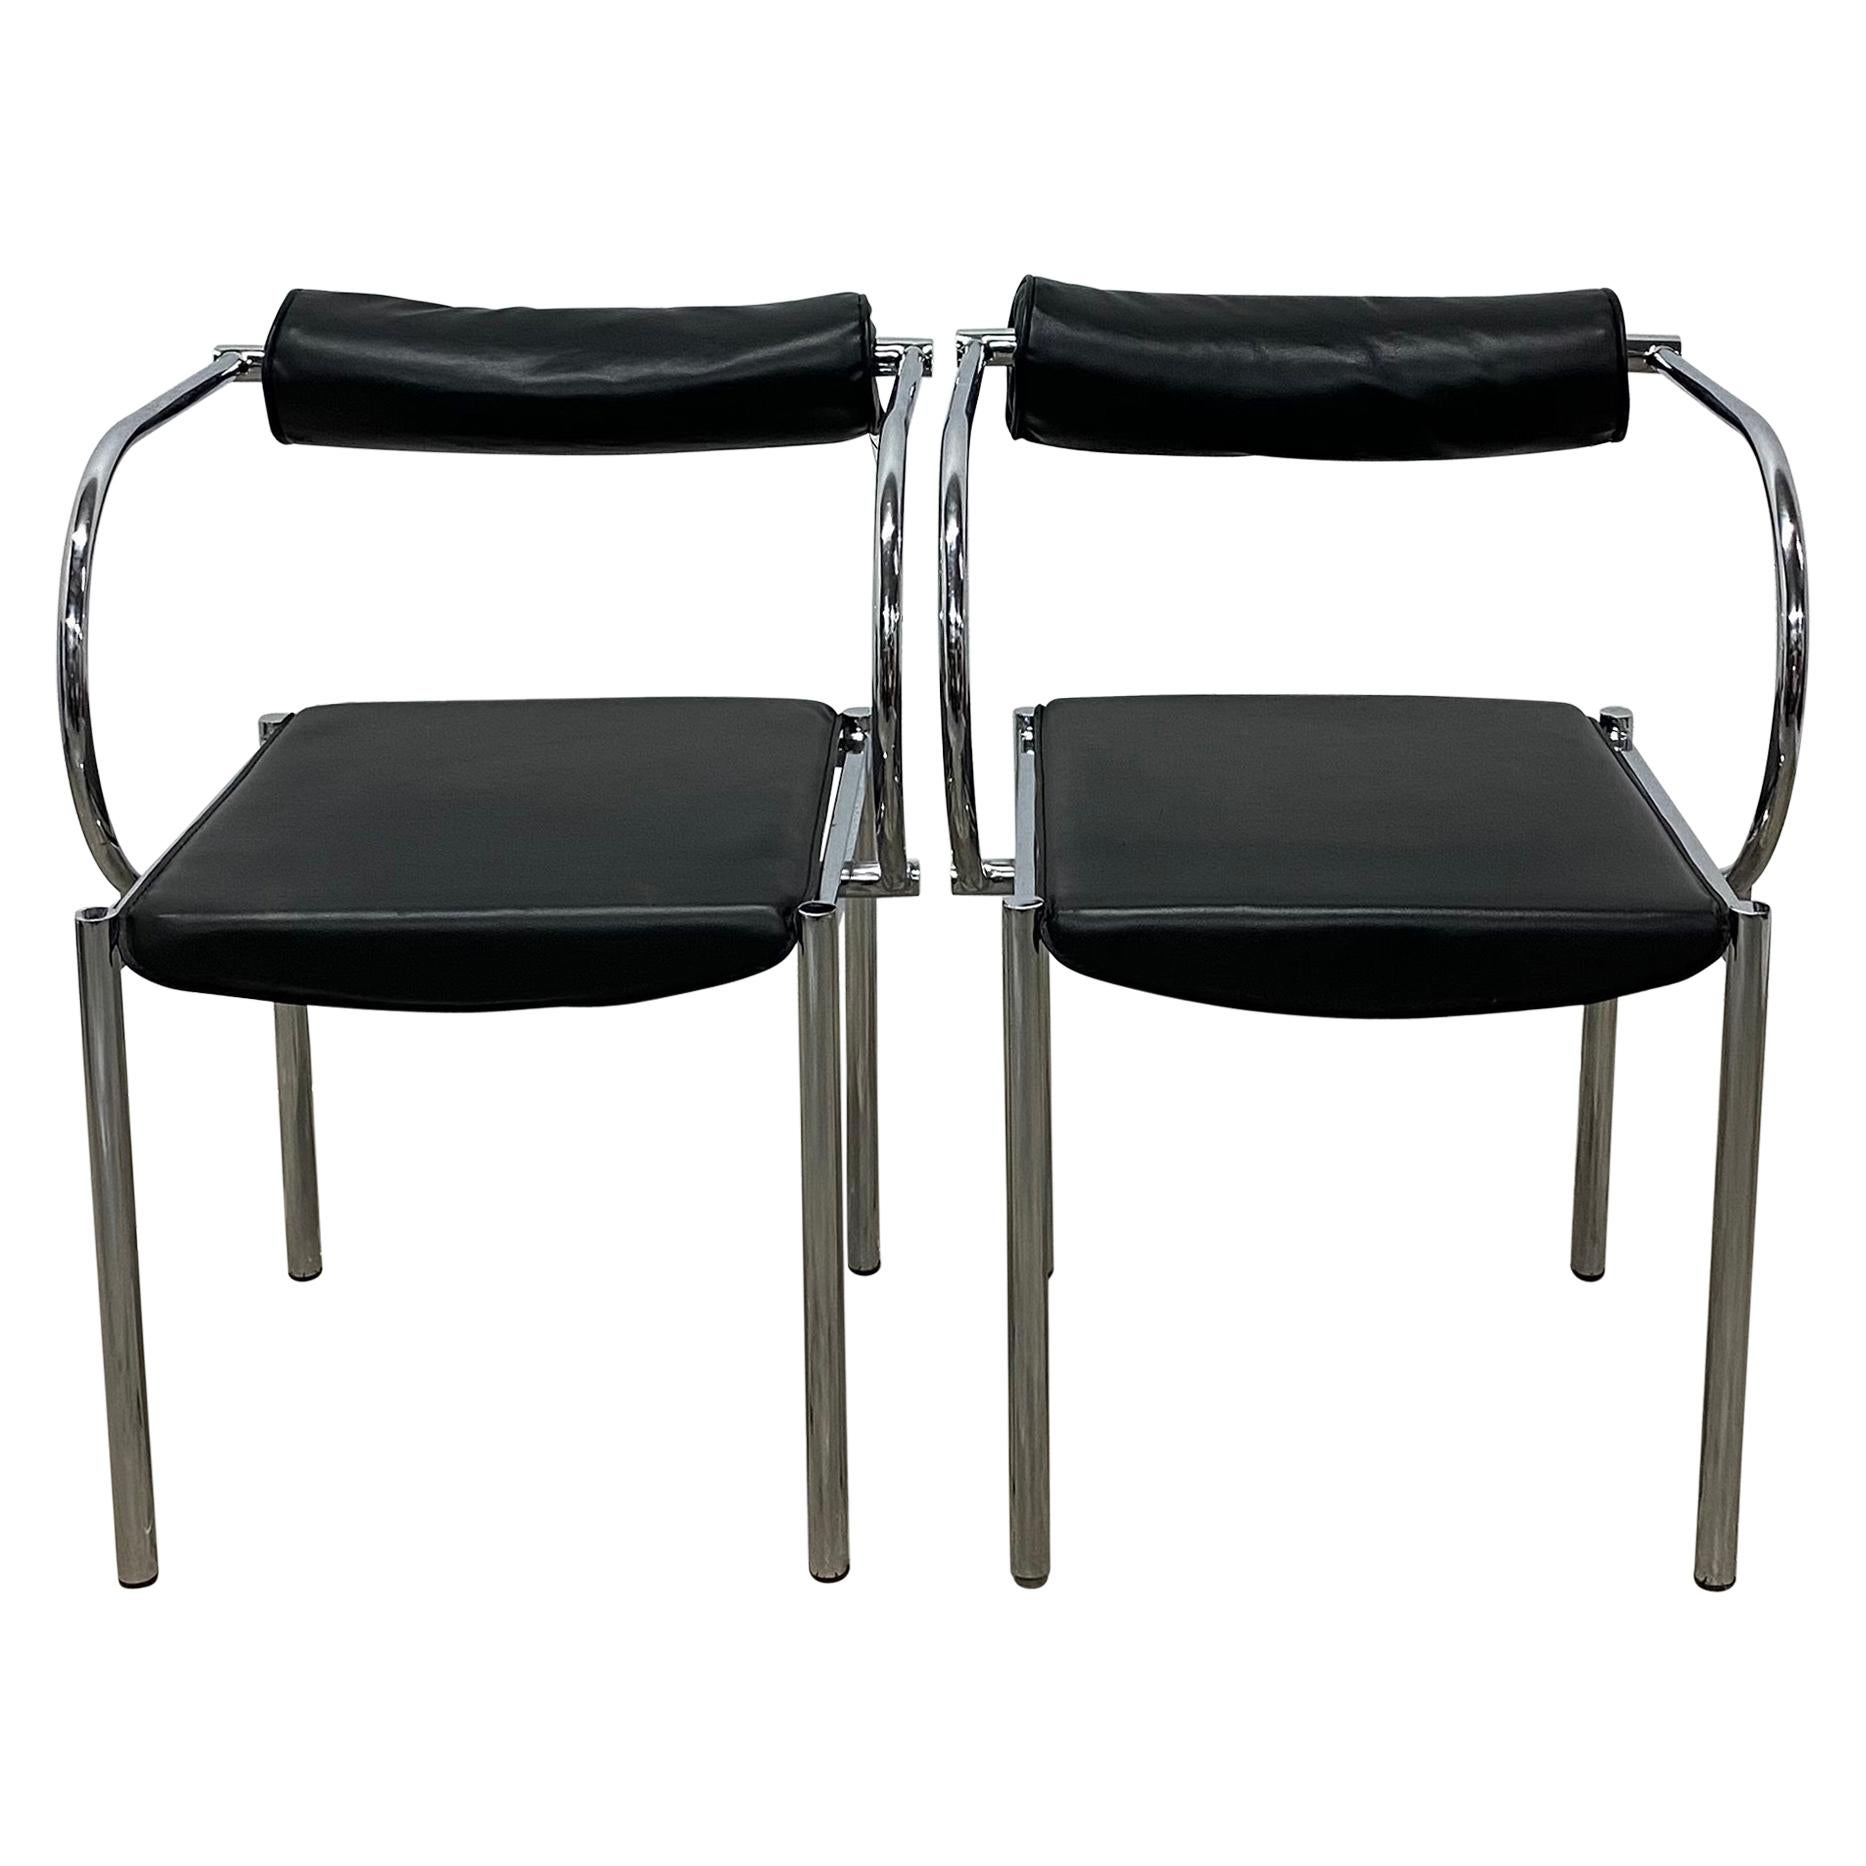 Black and Chrome Postmodern Chairs - a Pair